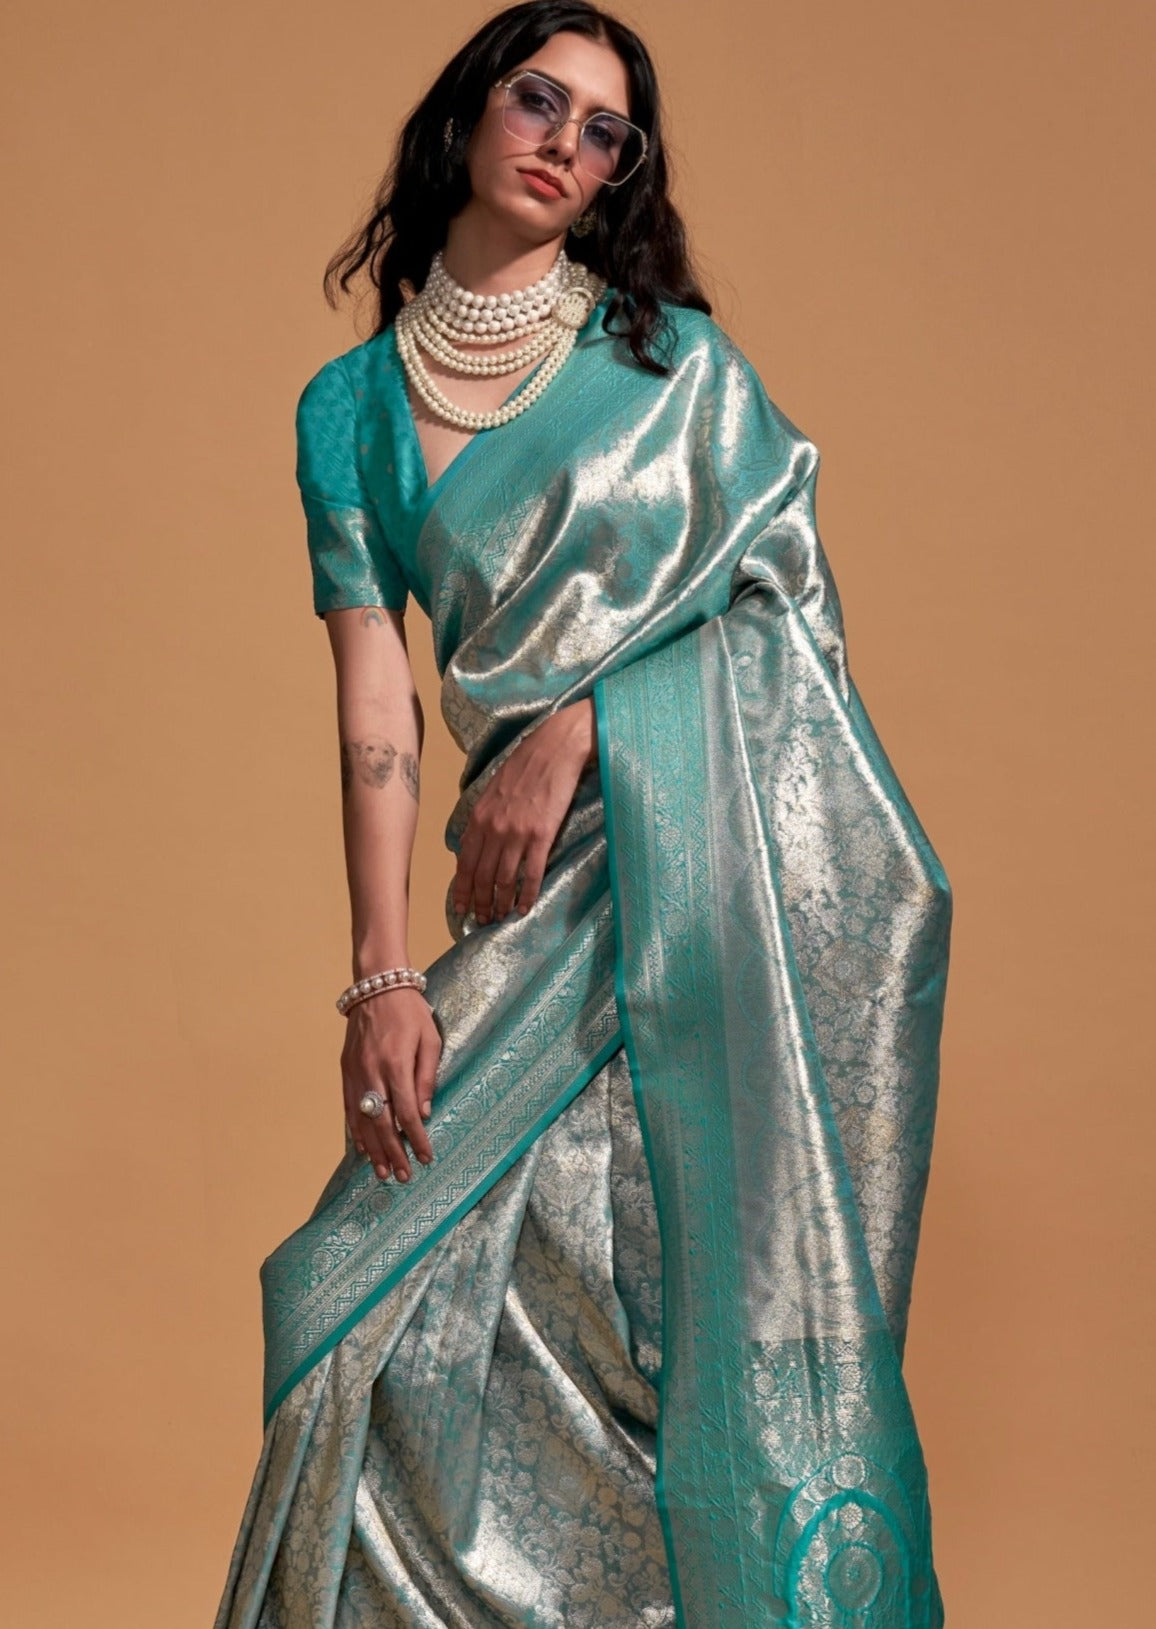 Pure handloom kanjivaram silk saree online india usa uk in emerald green color for bride.